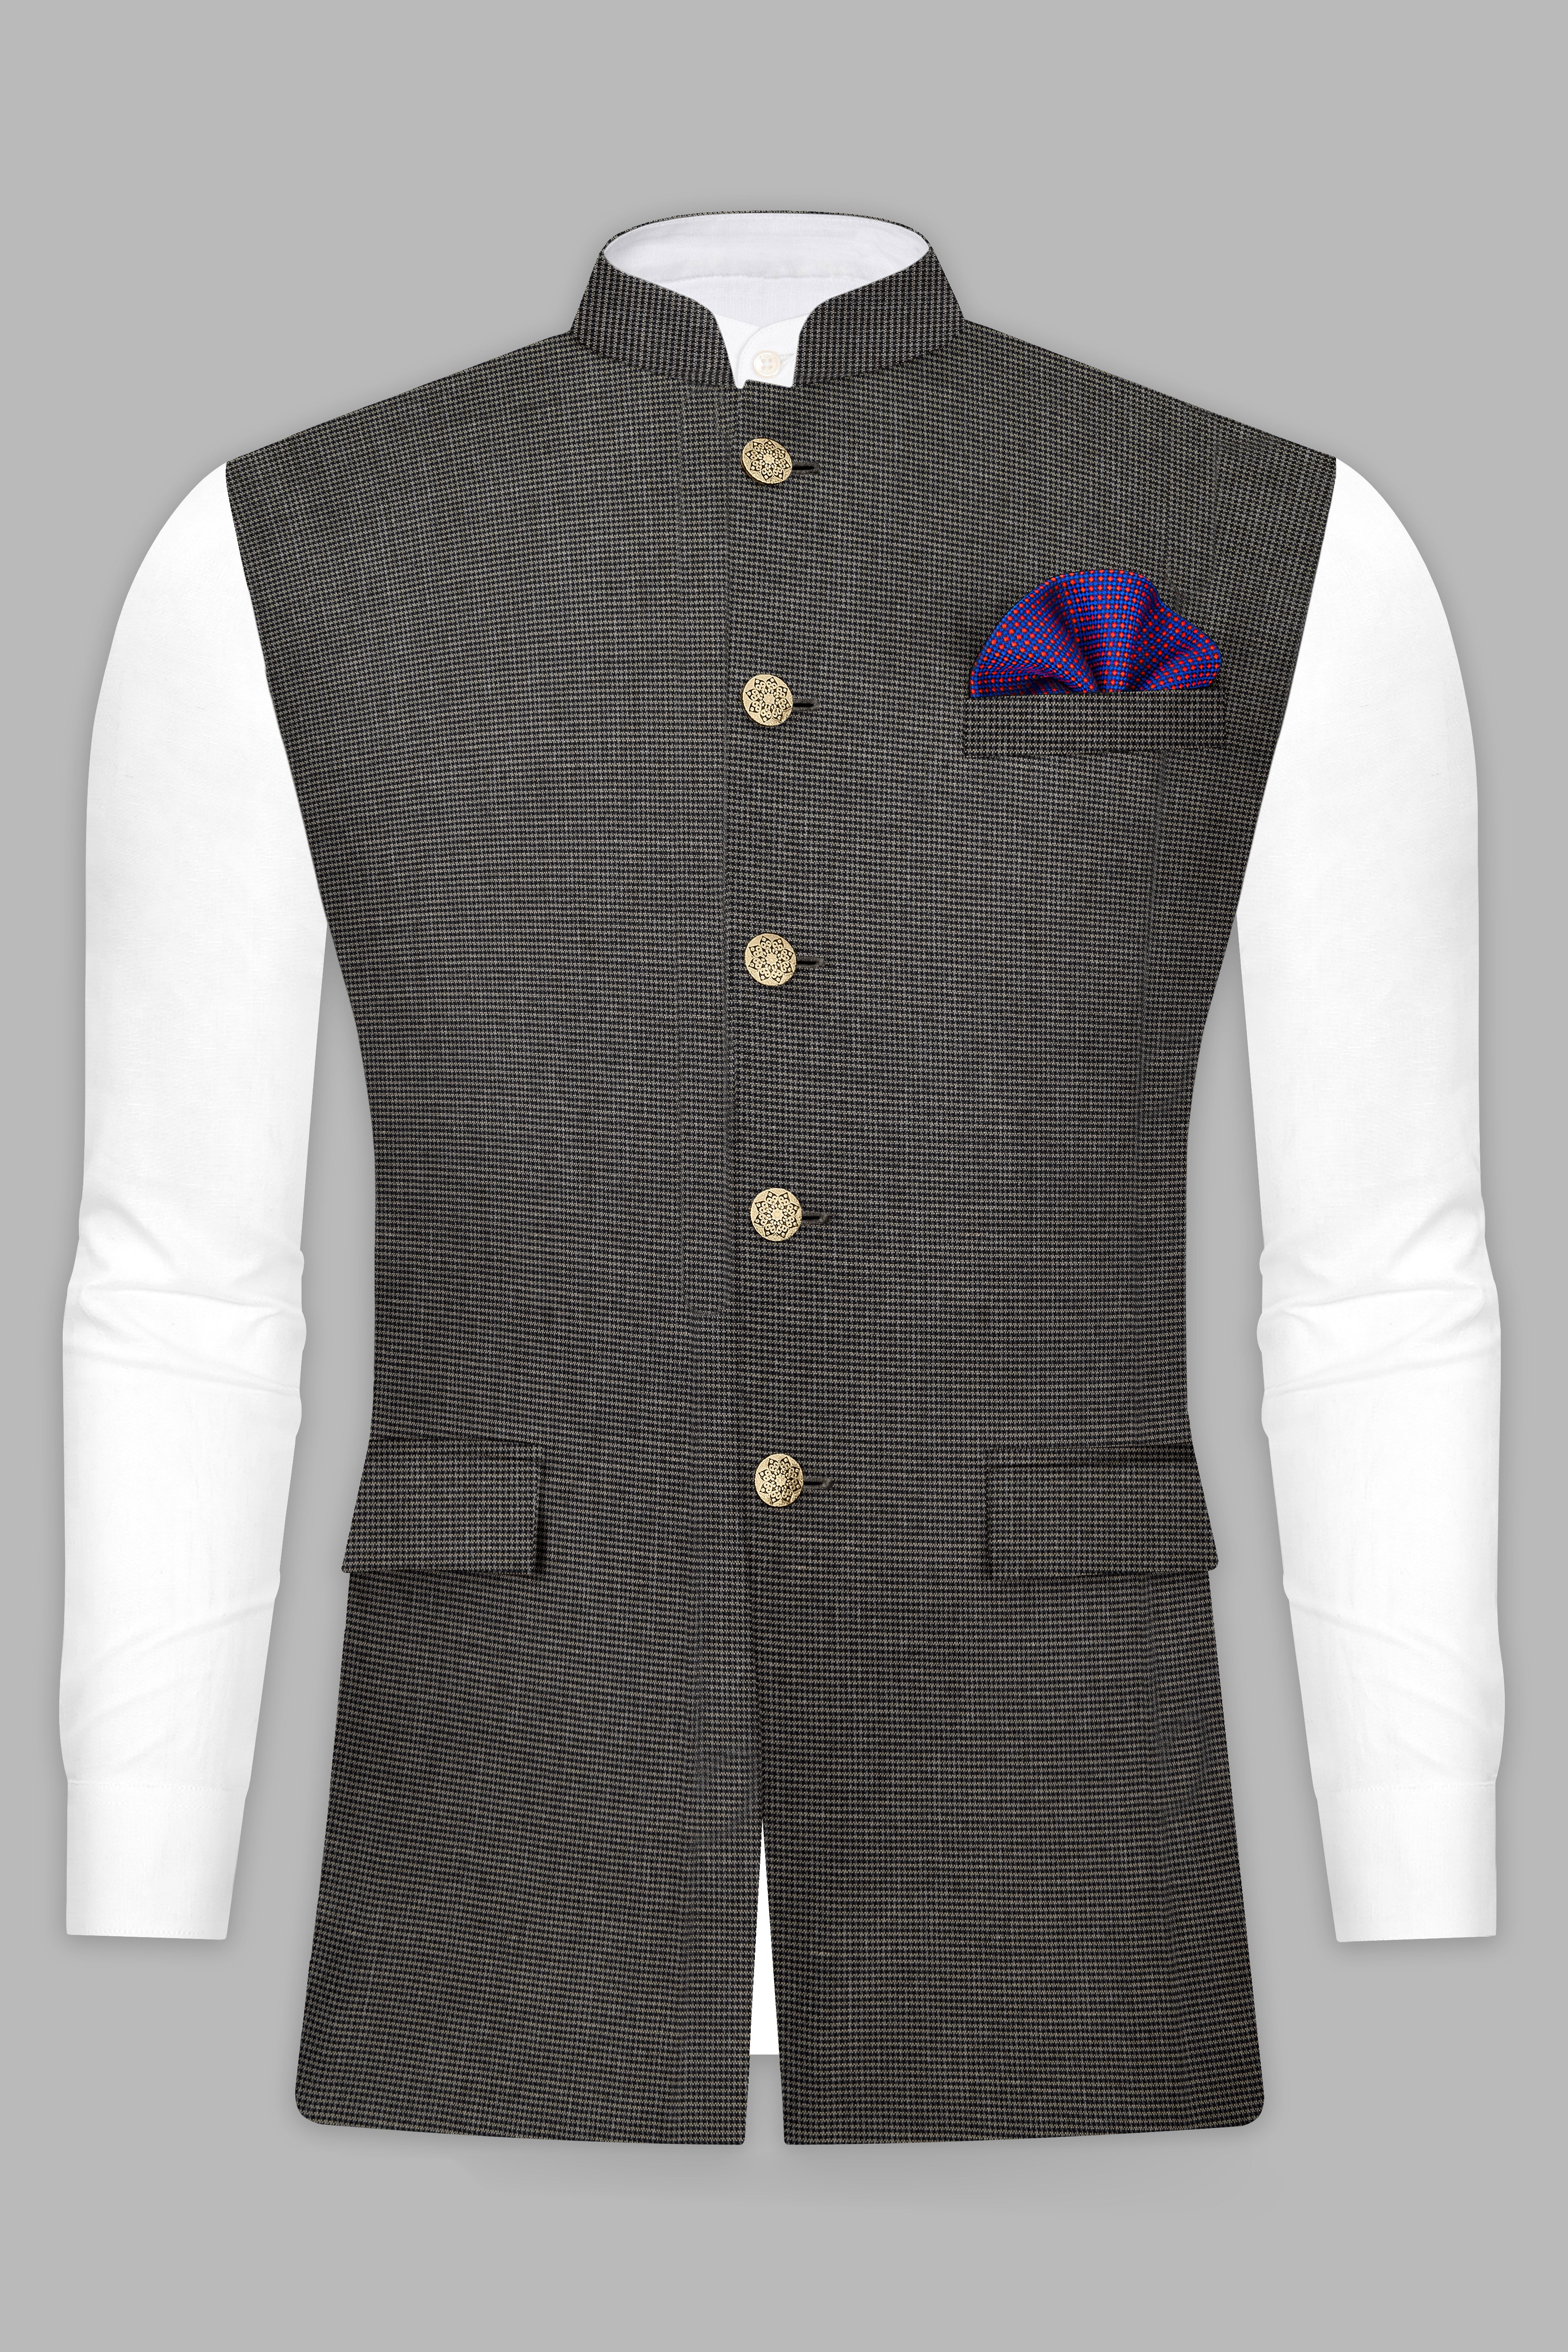 Iridium Gray Wool Rice Designer Nehru Jacket